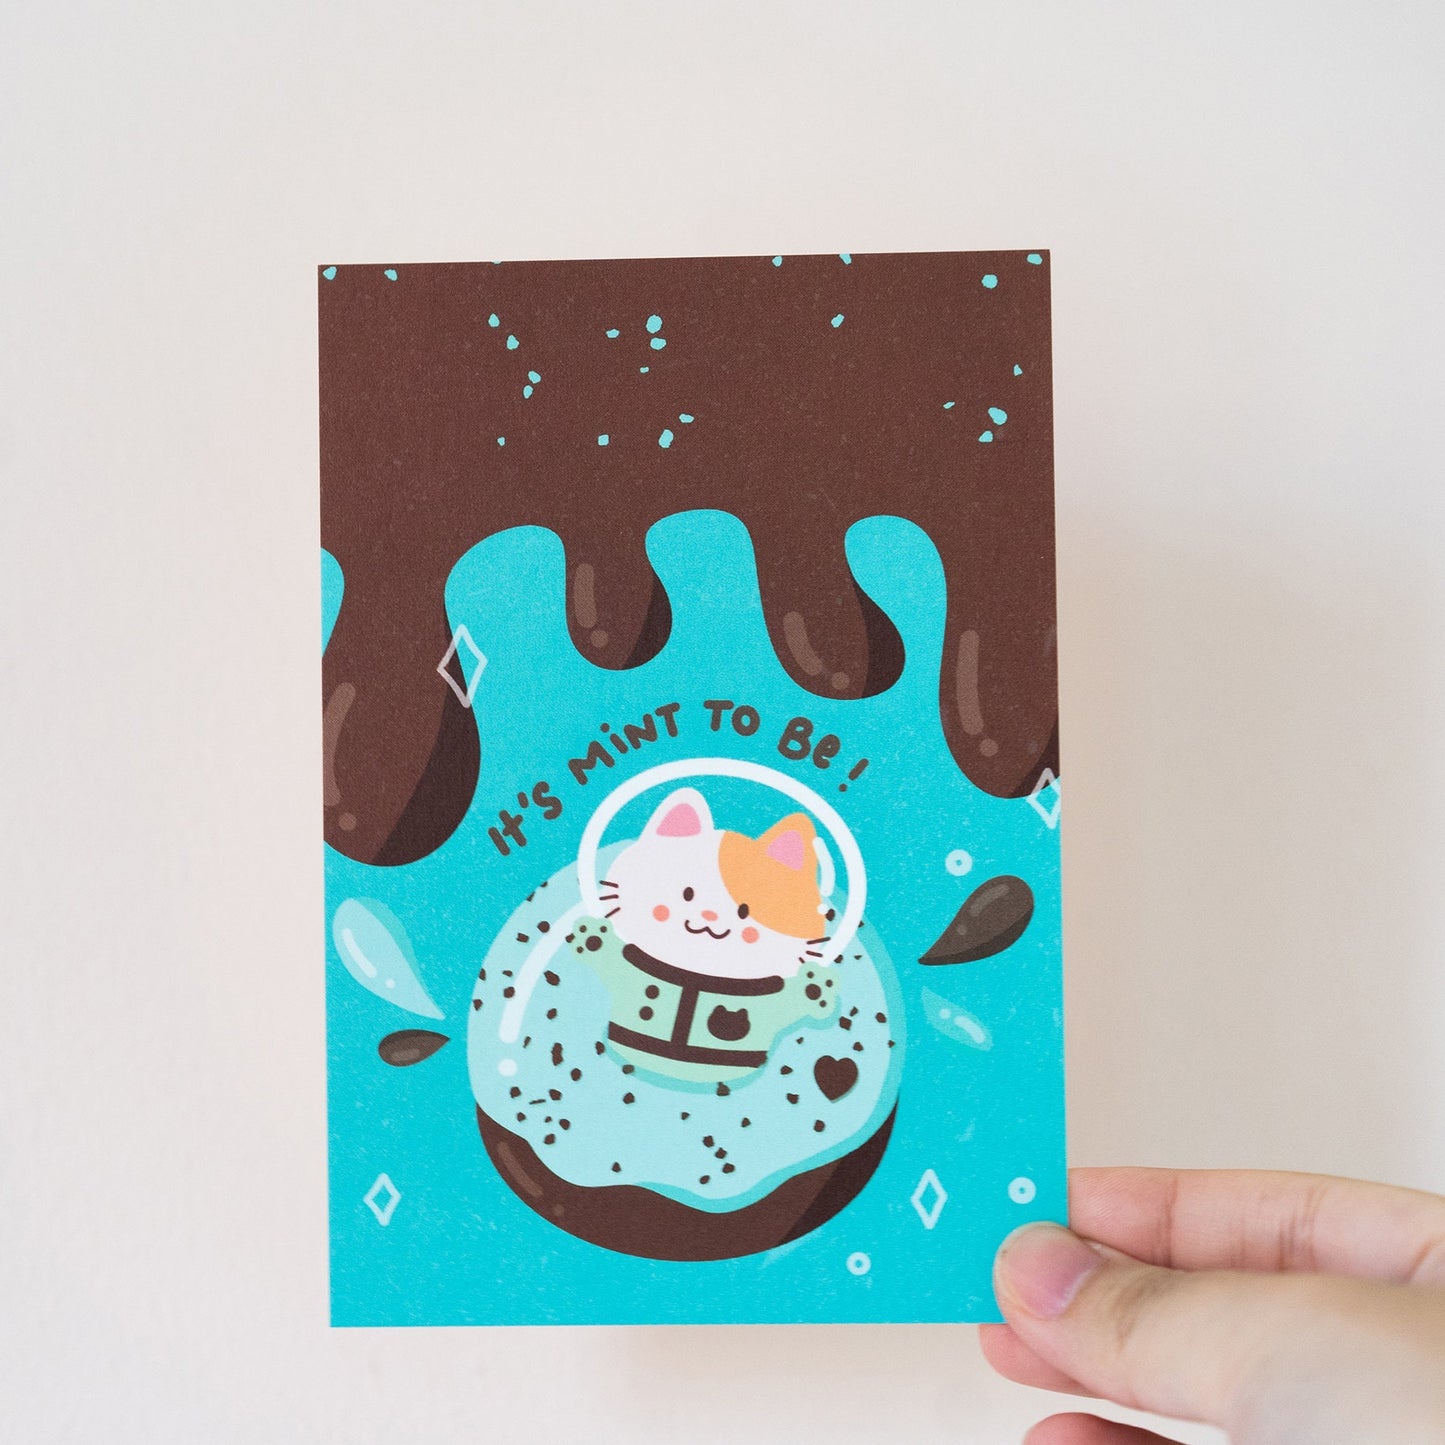 Mint Choco Postcards / Prints